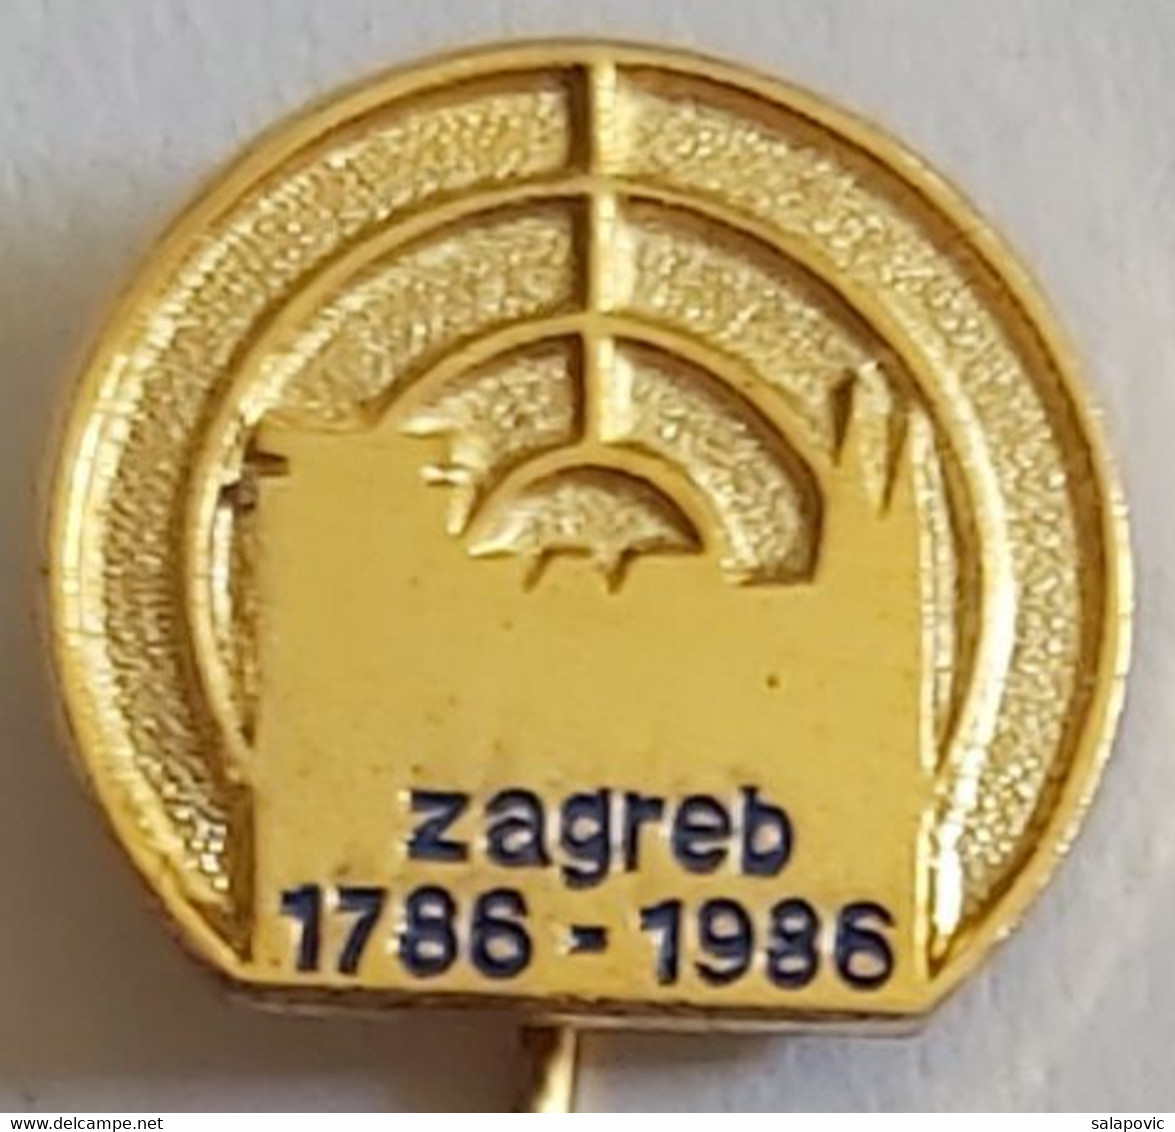 Zagreb 1786 - 1886 Croatia Archery Zagreb Shooting Association PIN A6/2 - Tir à L'Arc